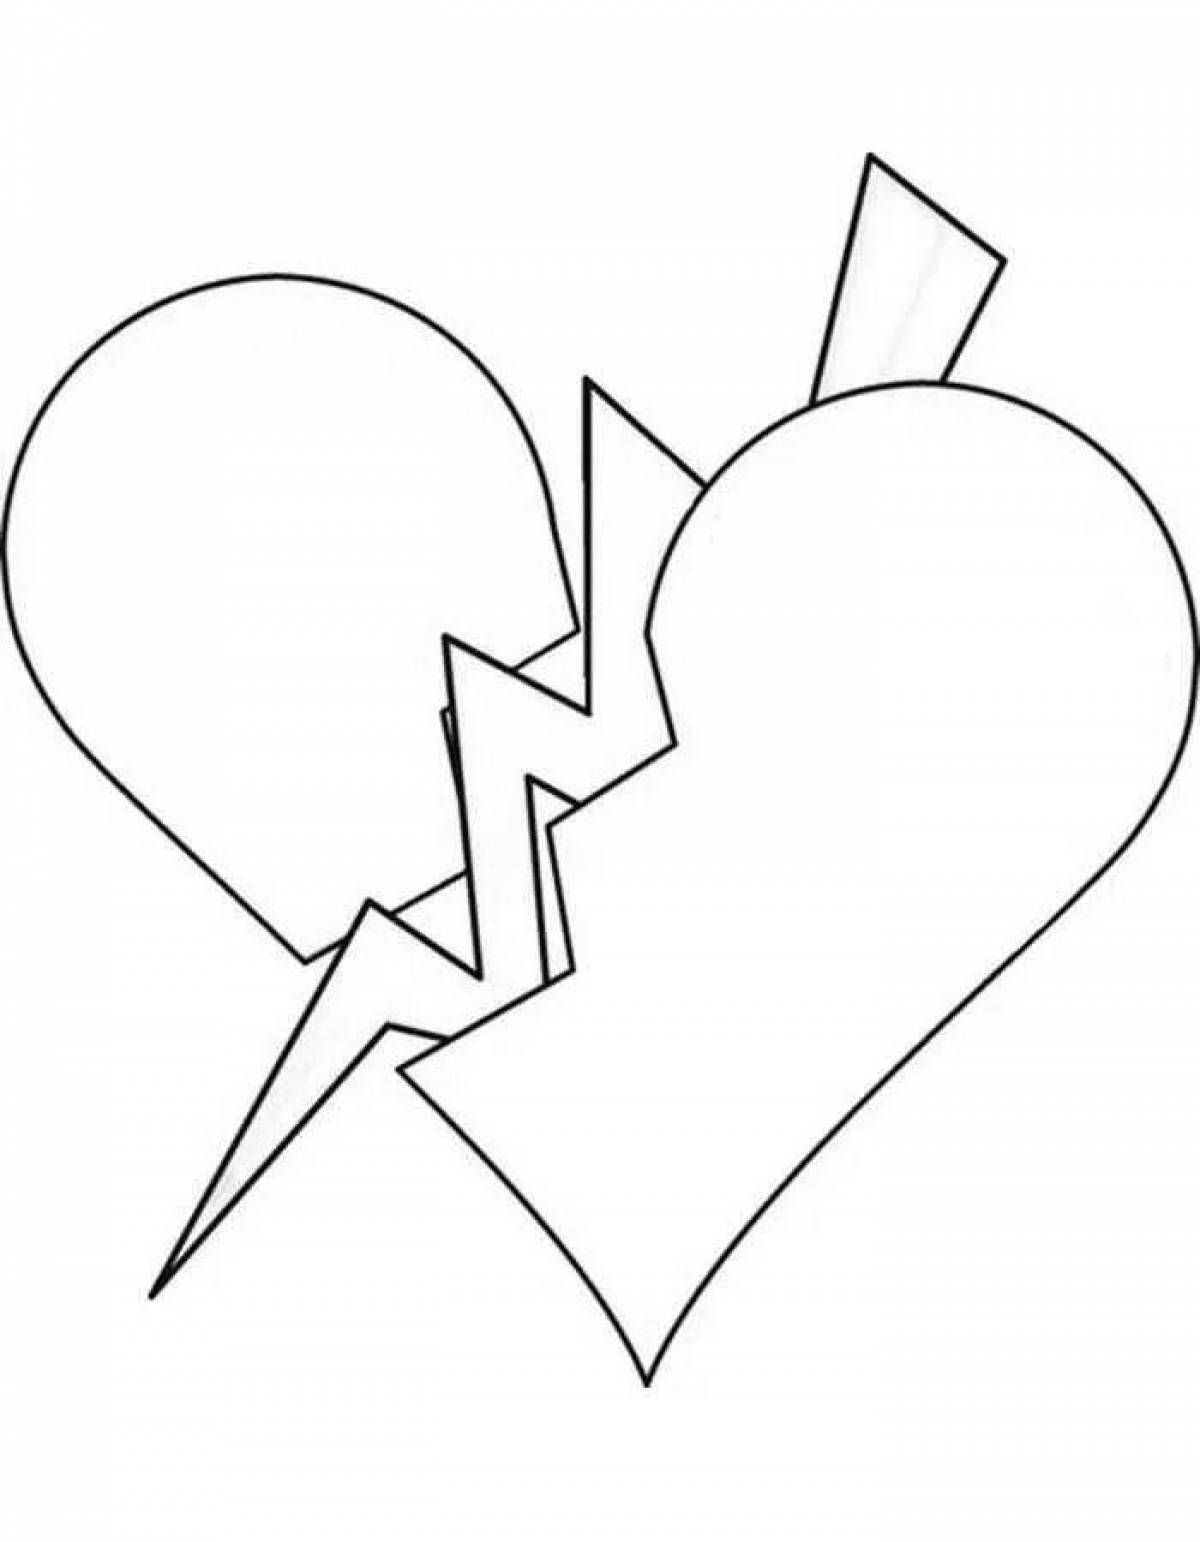 Luxury broken heart coloring page